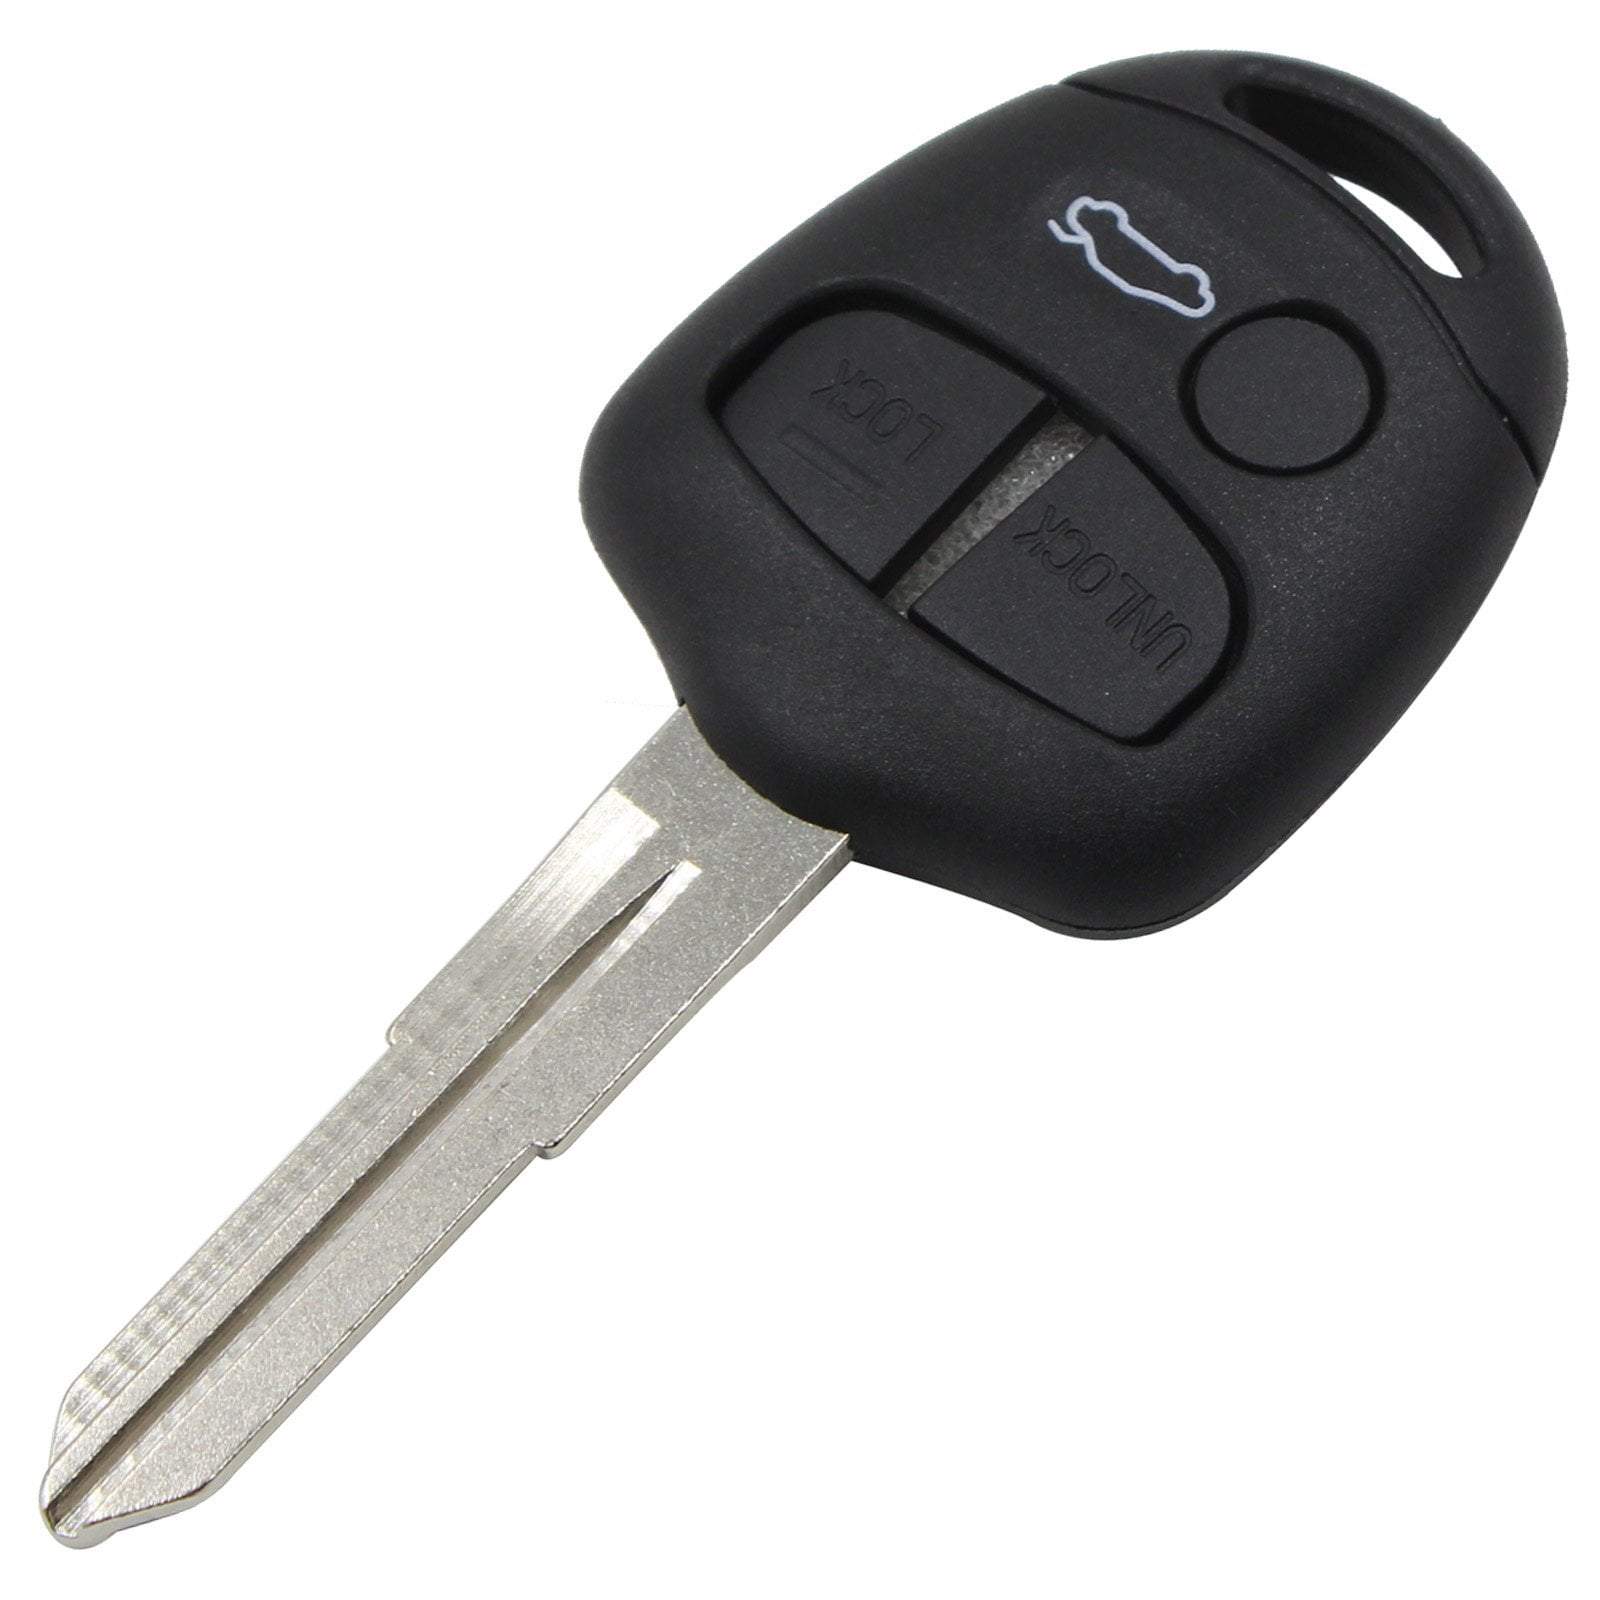 Fekete színű, 3 gombos Mitsubishi kulcs, kulcsház.